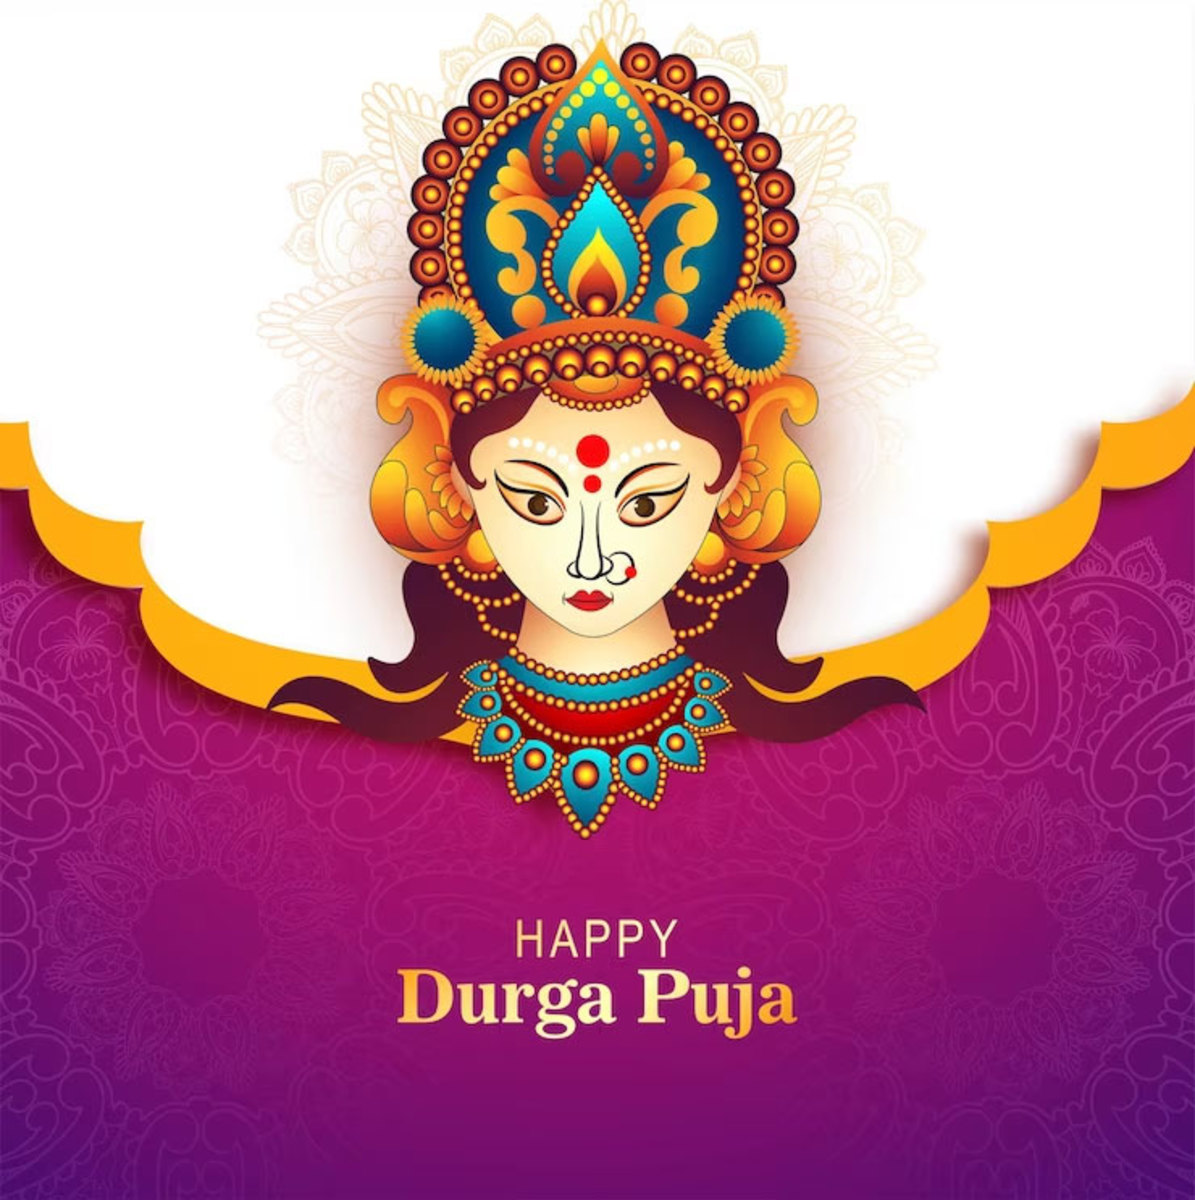 Significance Of Durga Pujas In Hindu Mythology Among The Bongs